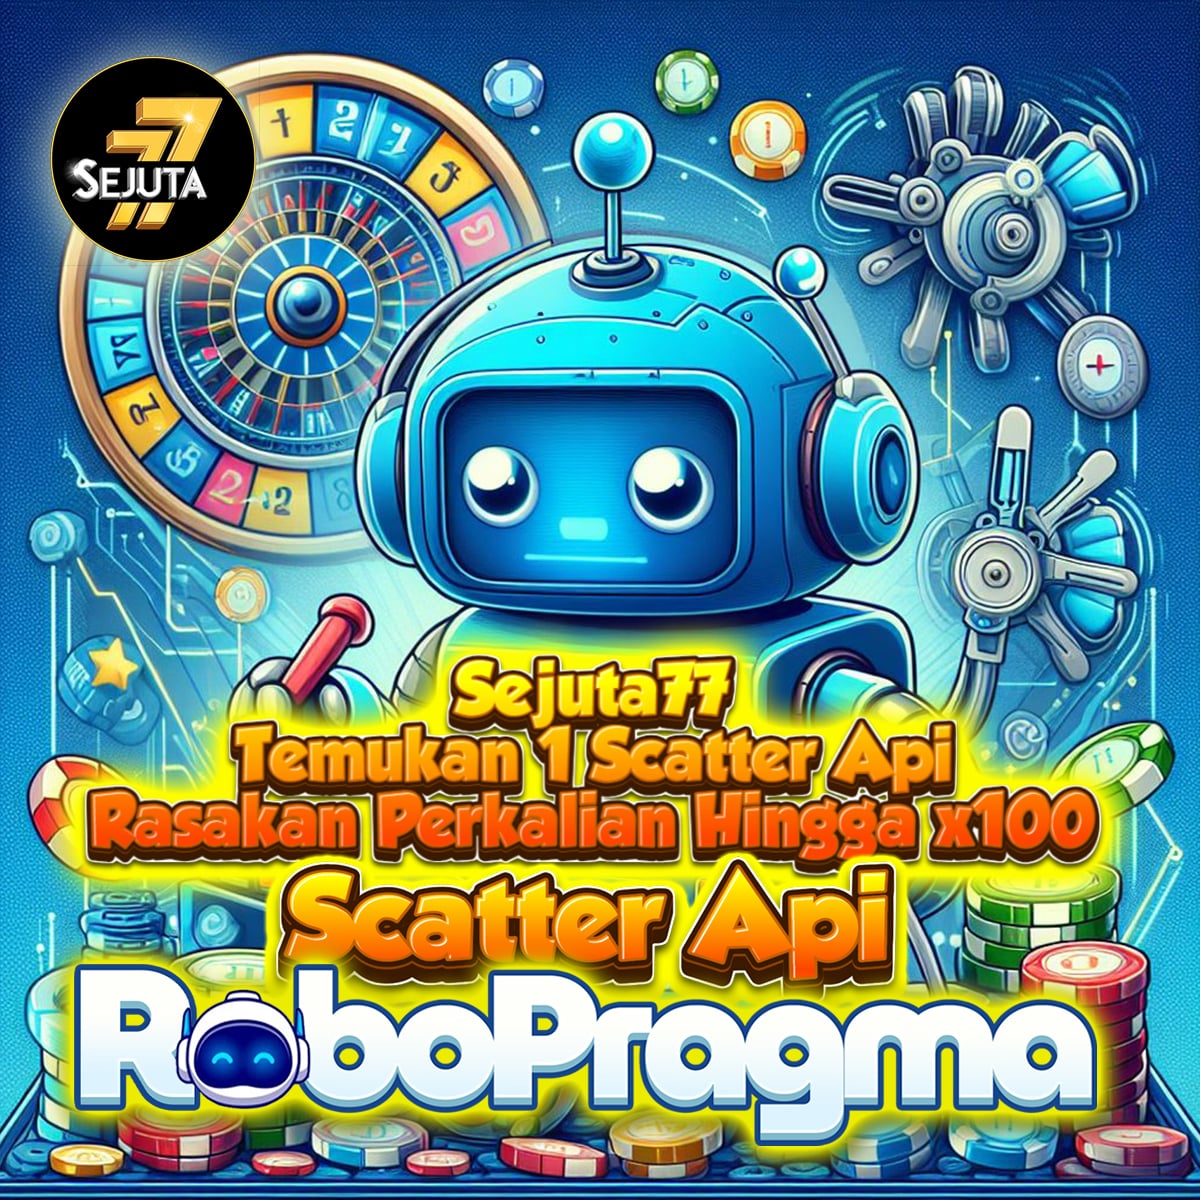 Robopragma - Yakin Gak Mau Download Robopragma Apk Slot Gacor Terpopular?